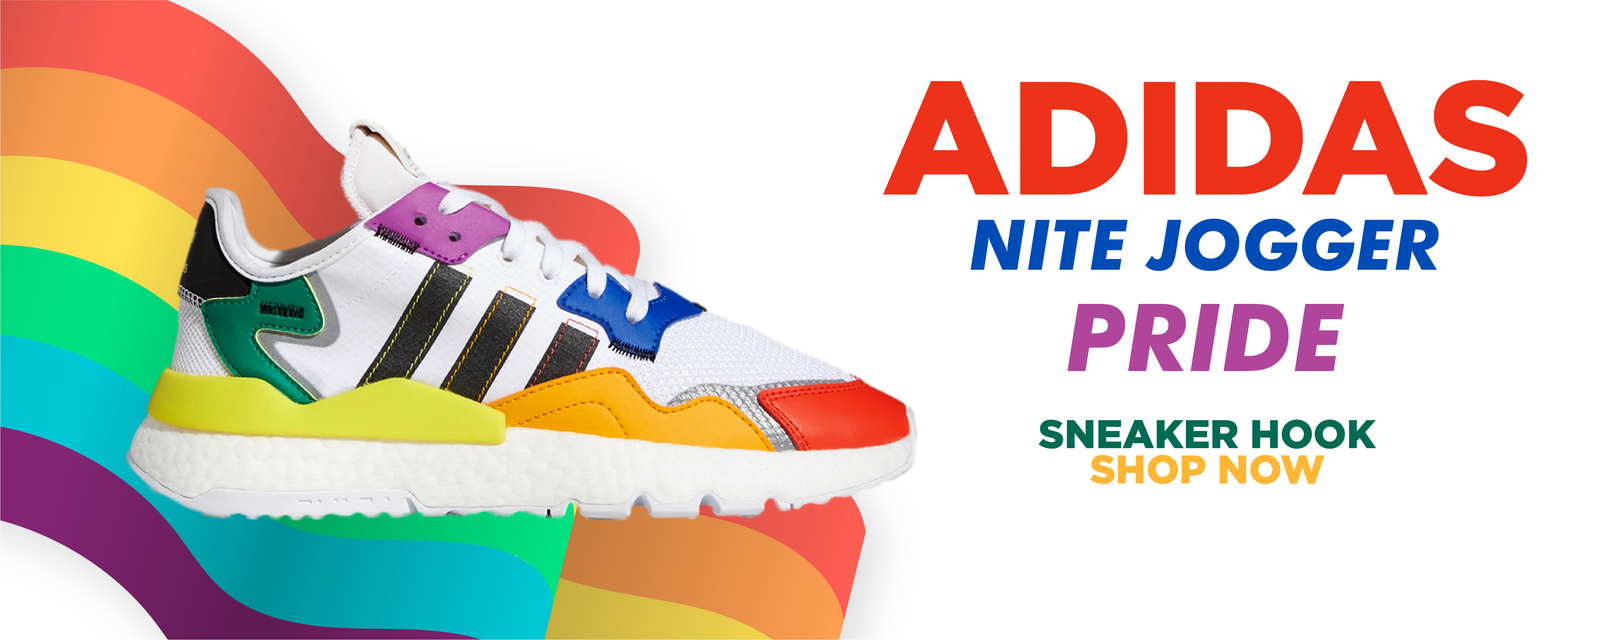 nite jogger pride shoes